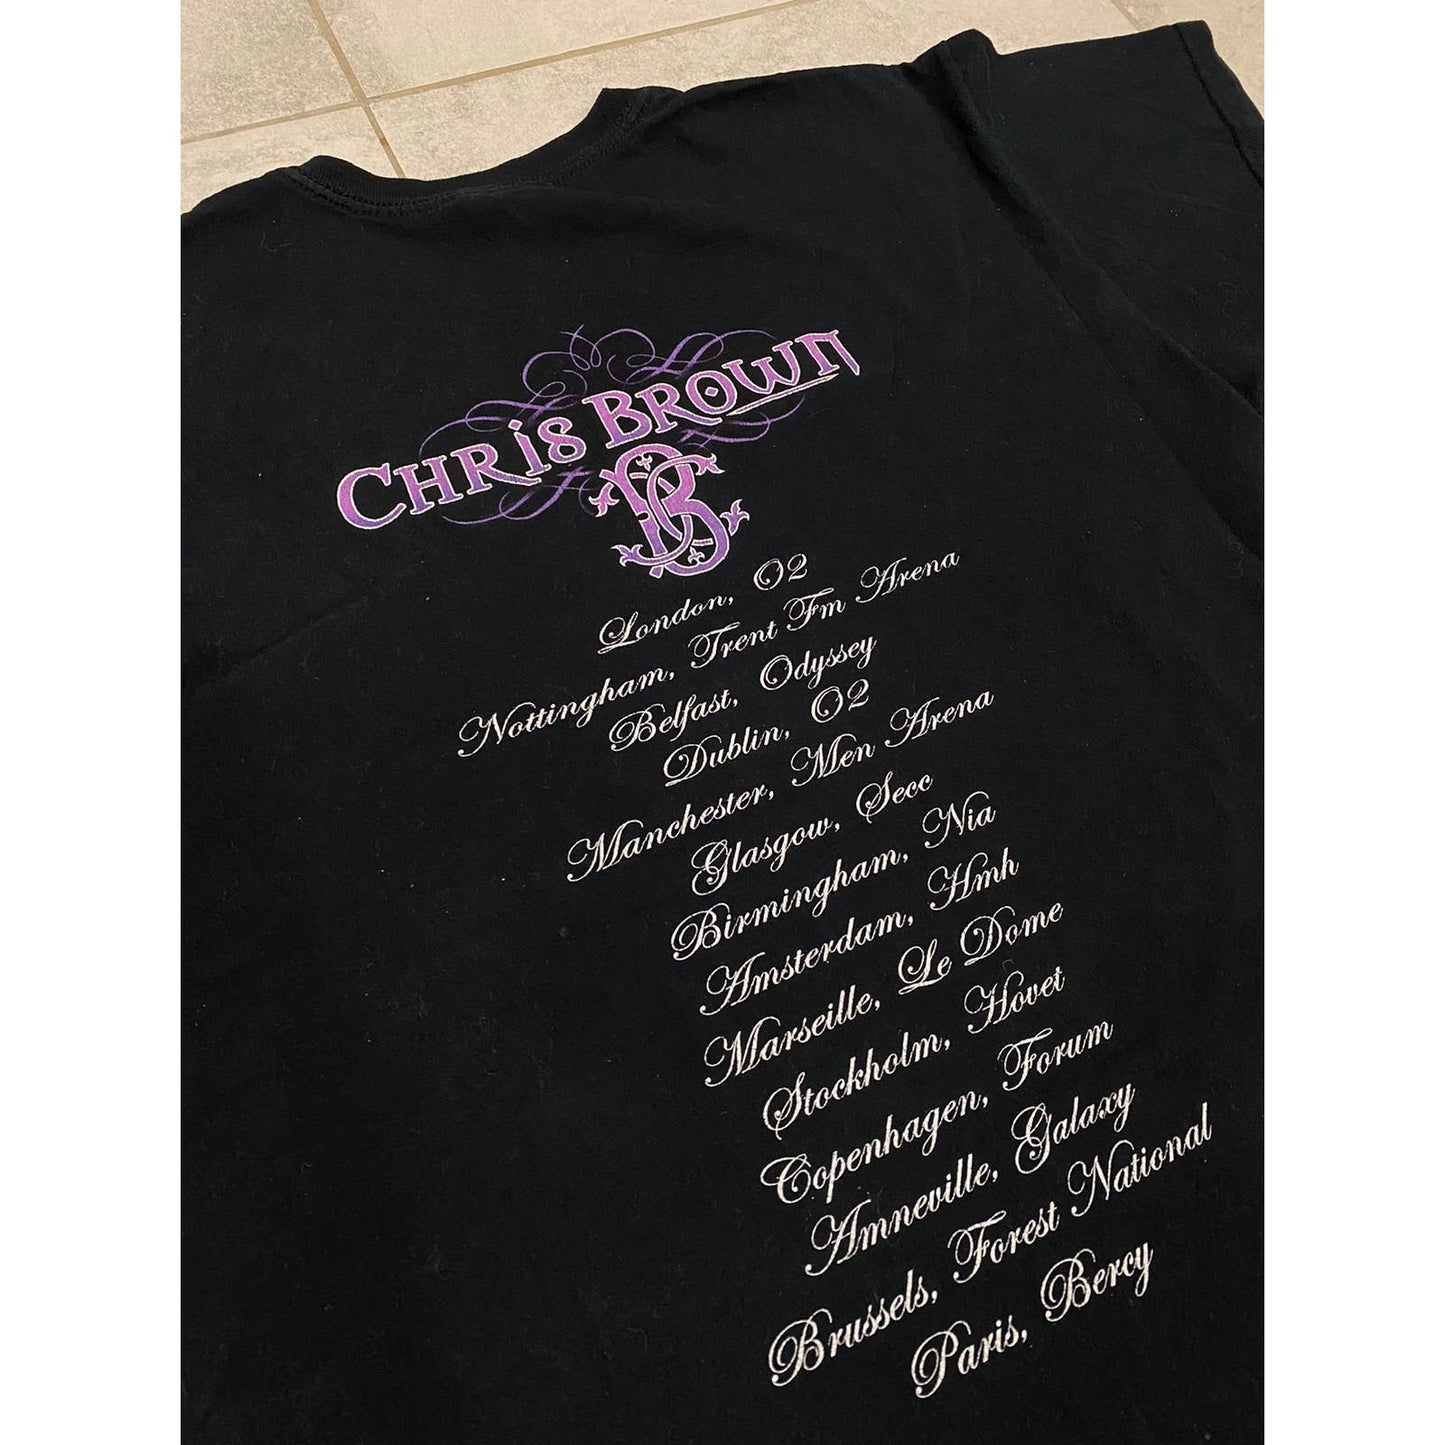 Chris Brown Europe tour black T-shirt vintage vibe